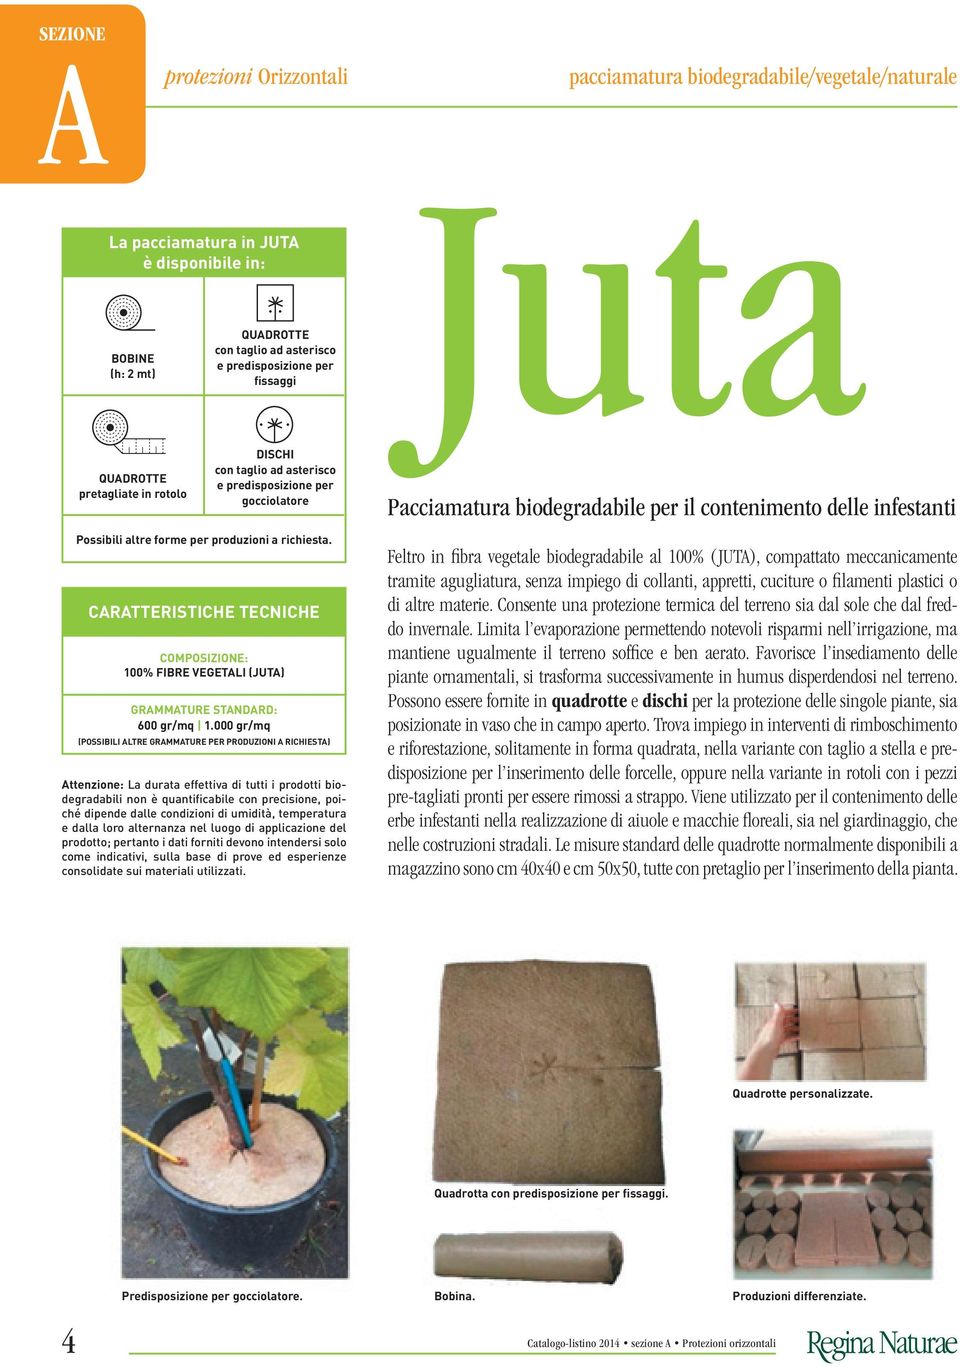 CARATTERISTICHE TECNICHE composizione: 100% fibre vegetali (JUTA) grammature standard: 600 gr/mq 1.